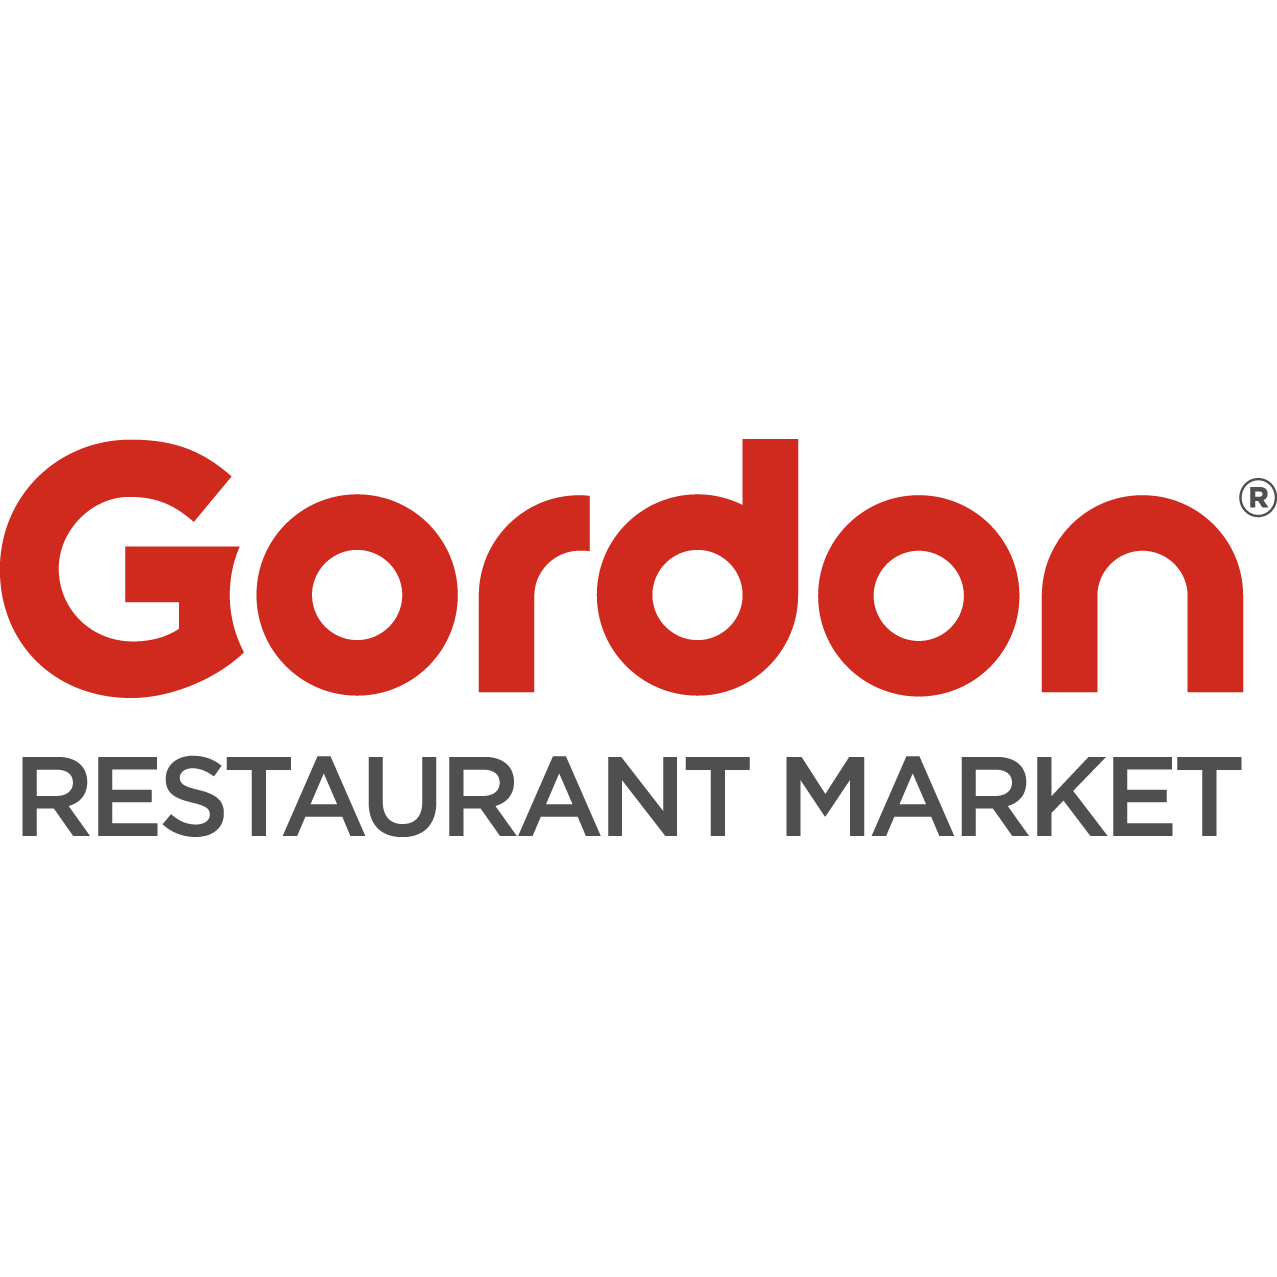 Gordon Restaurant Market - Galveston, TX 77550 - (409)220-1330 | ShowMeLocal.com